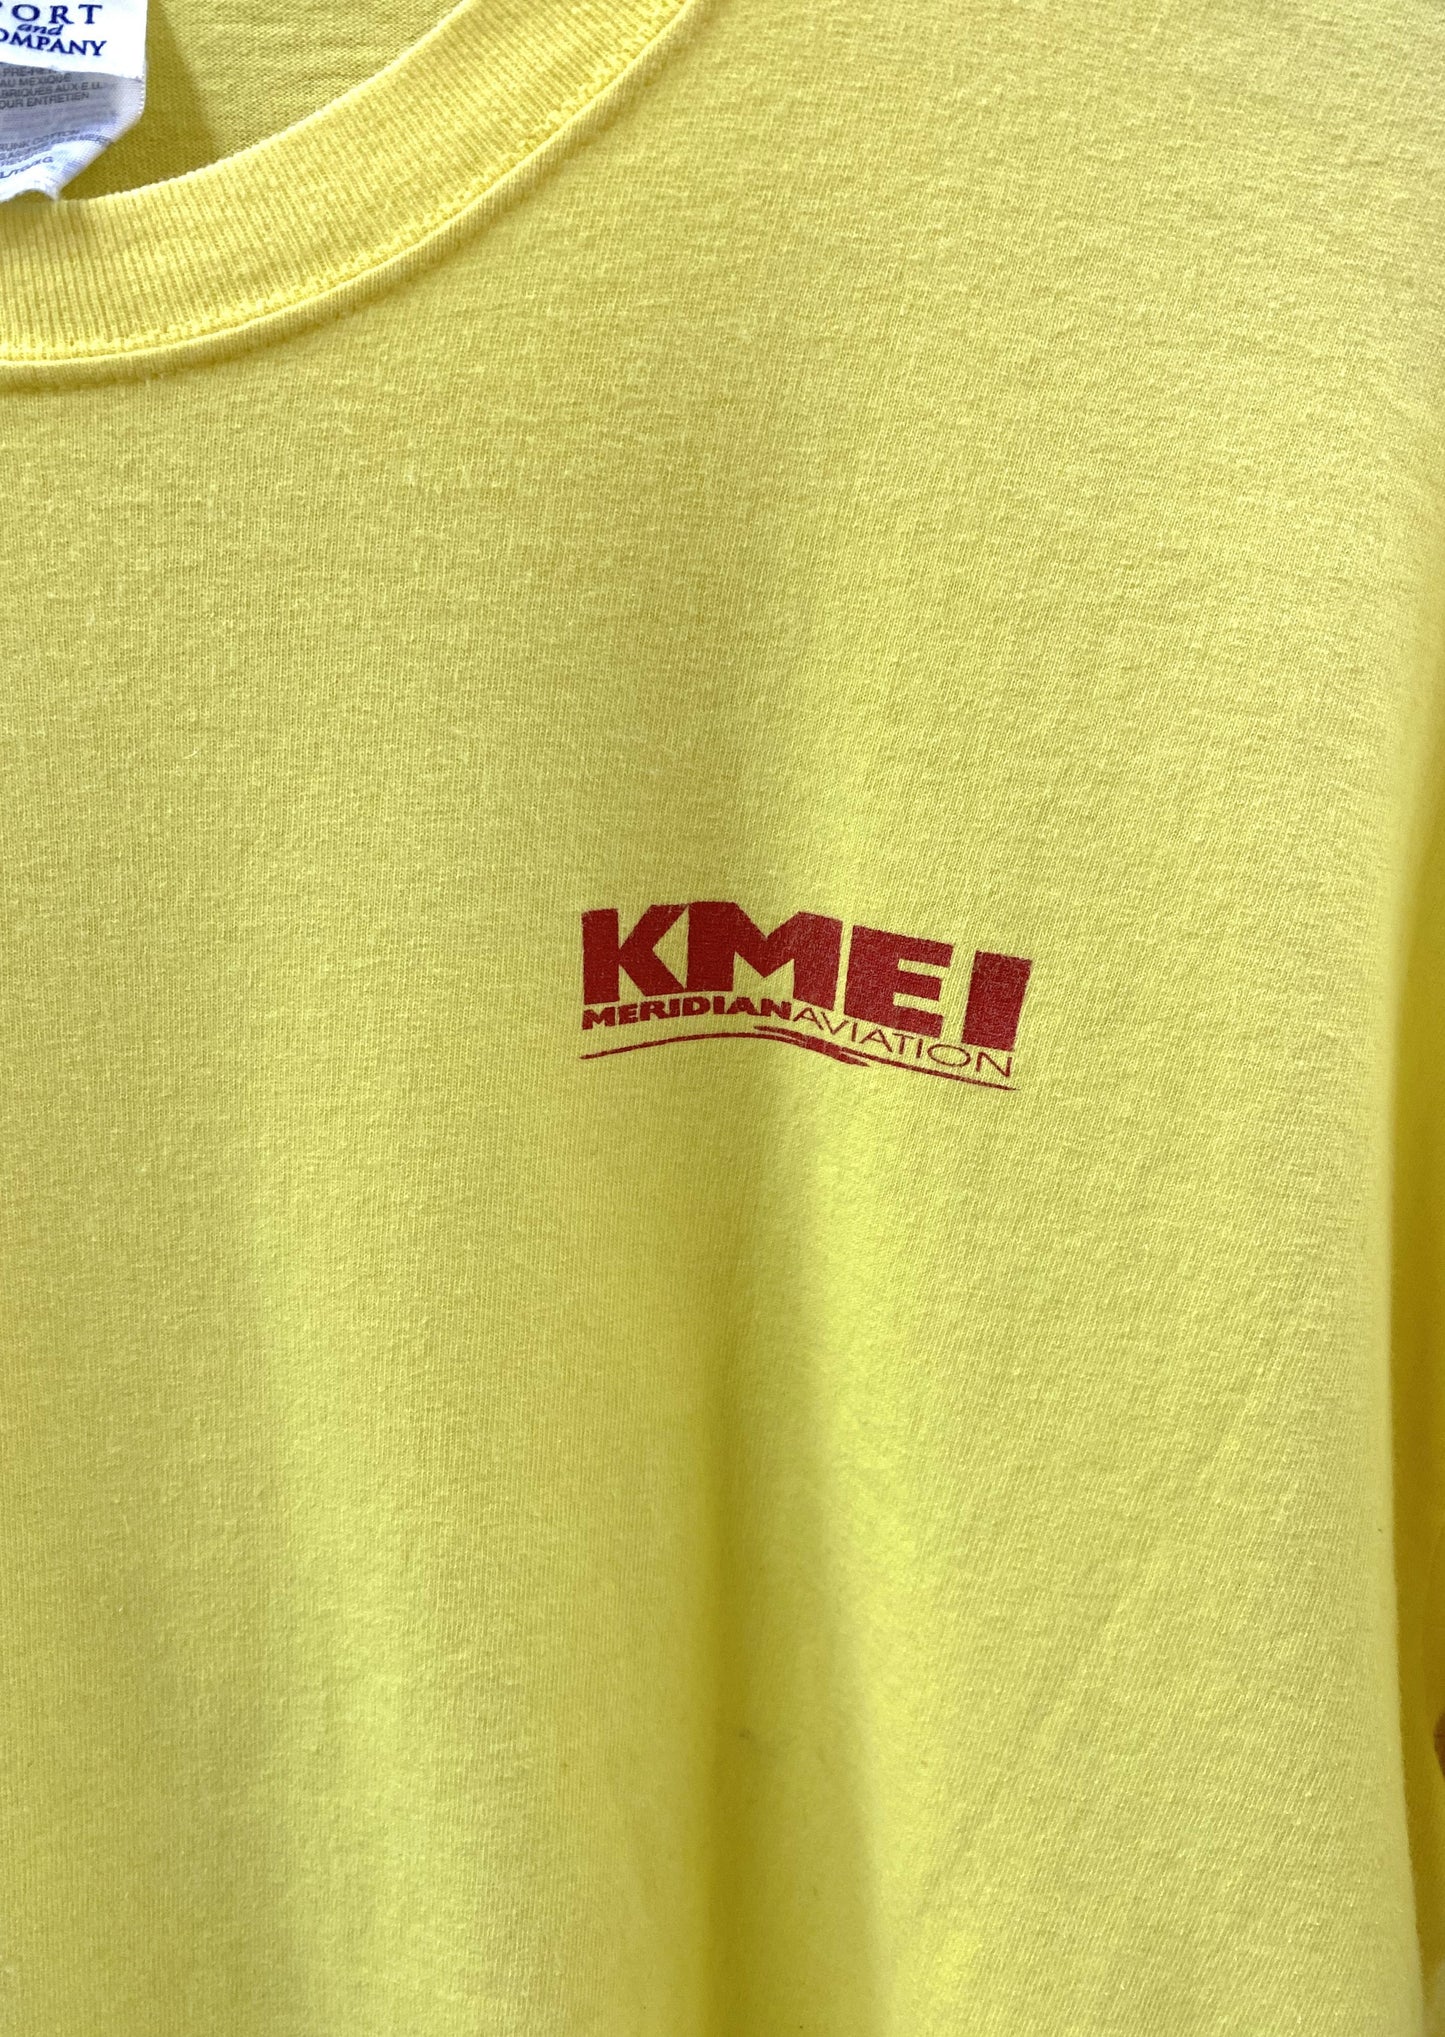 Kmei Meridian Aviation T-Shirt (4811527487568)